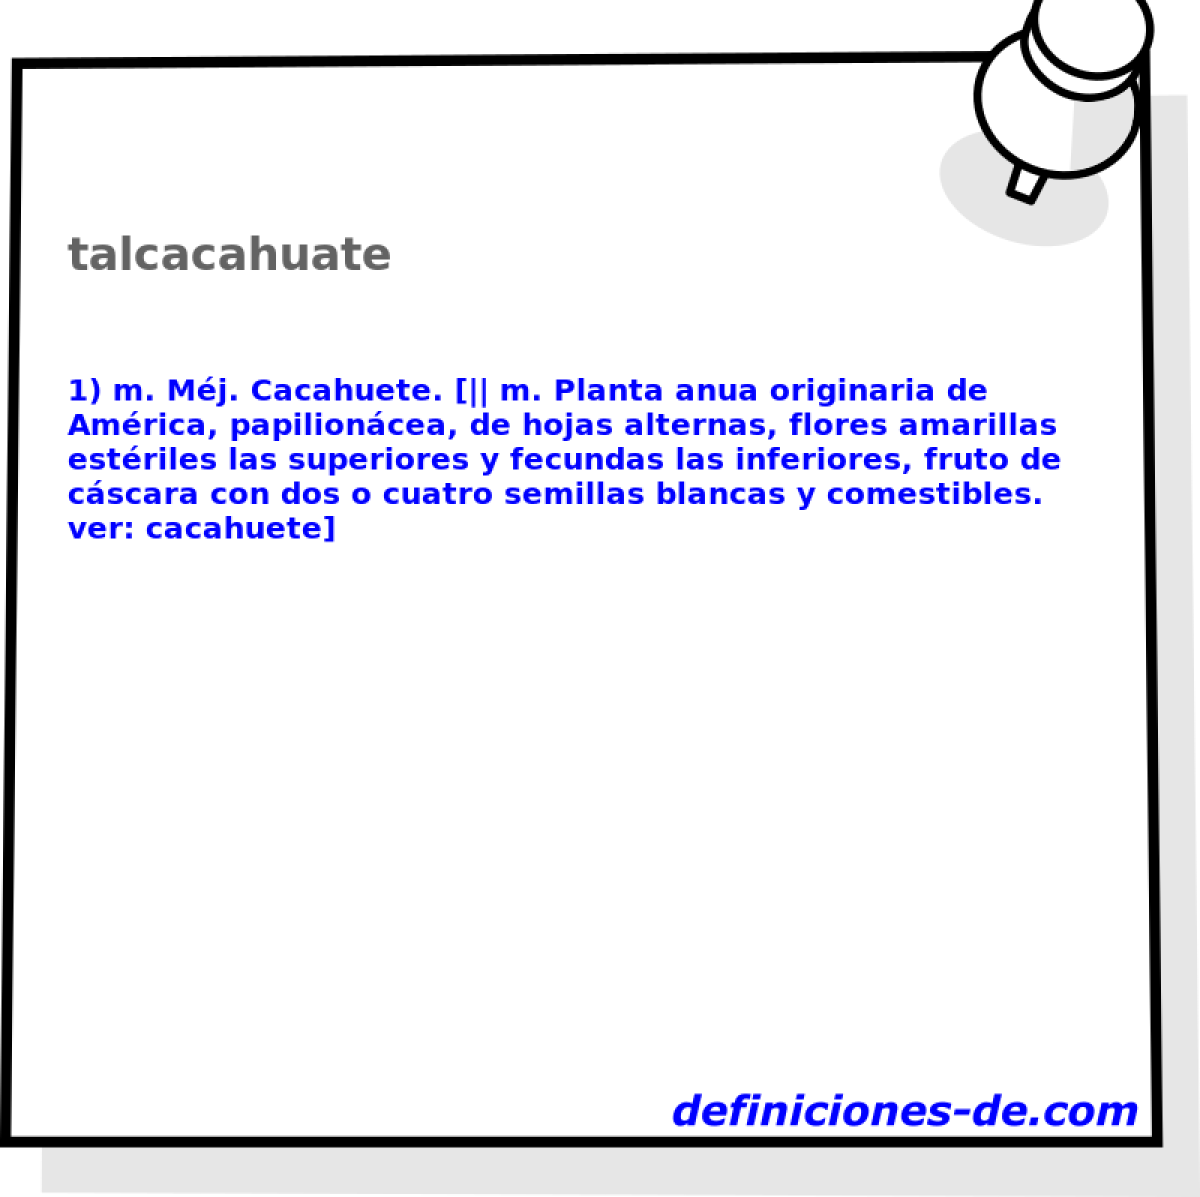 talcacahuate 